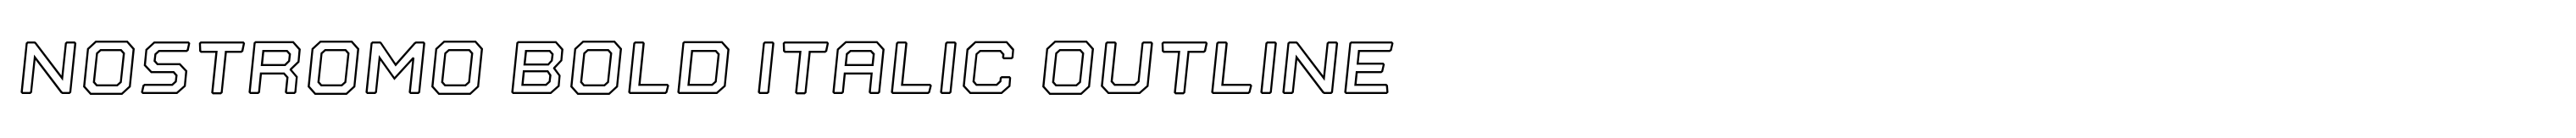 Nostromo Bold Italic Outline